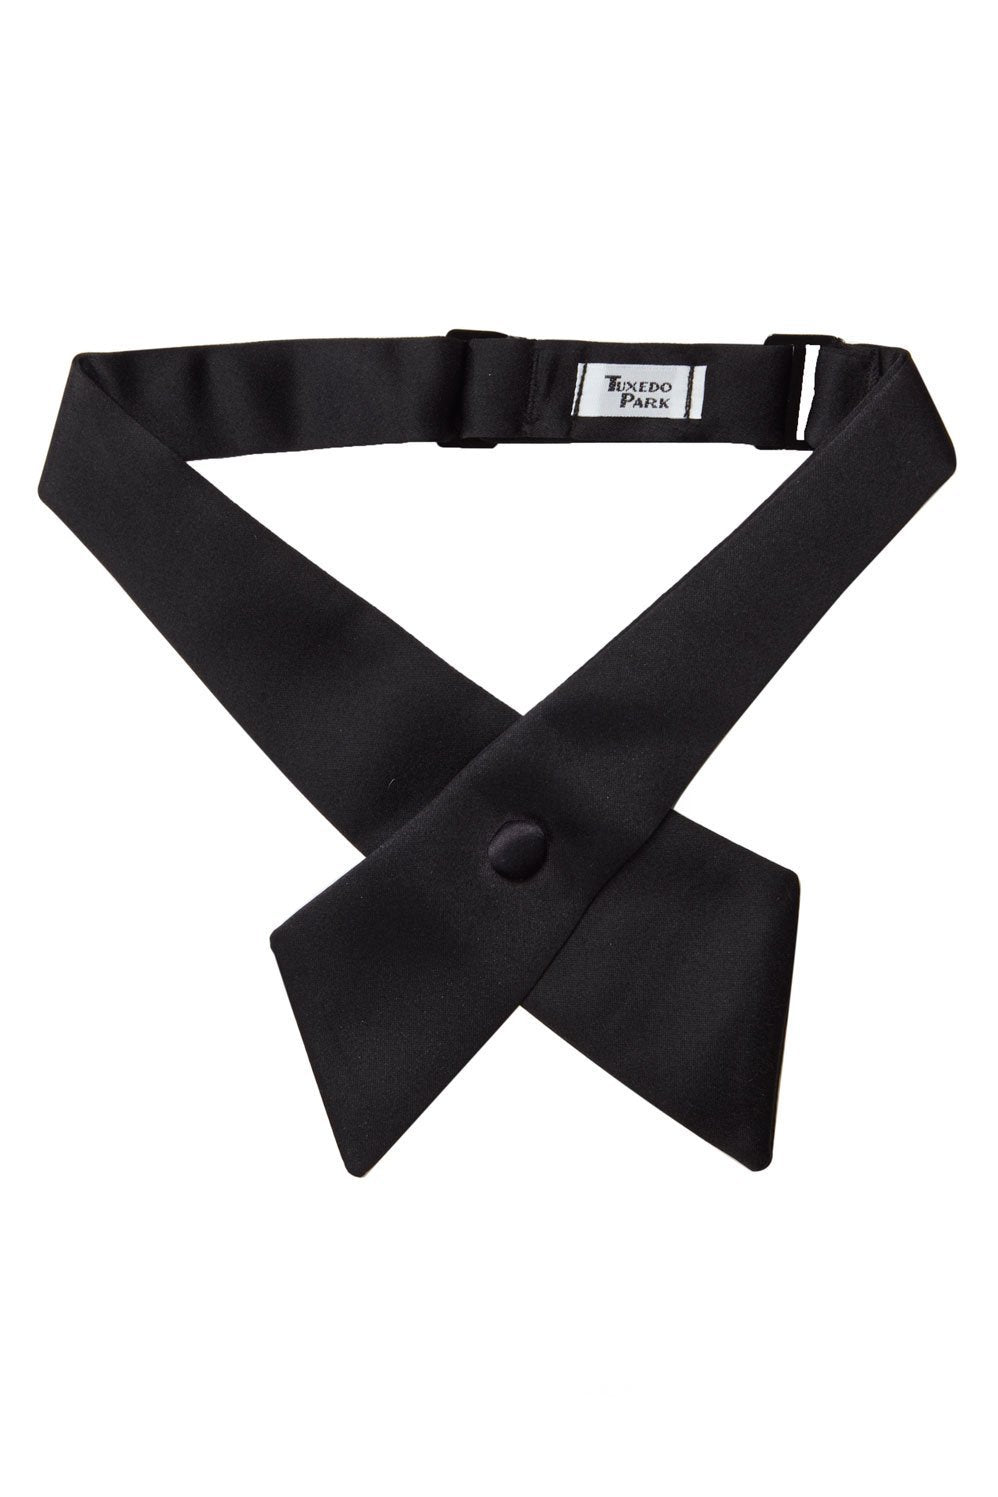 Tux Park Black Satin Crossover Bow Tie